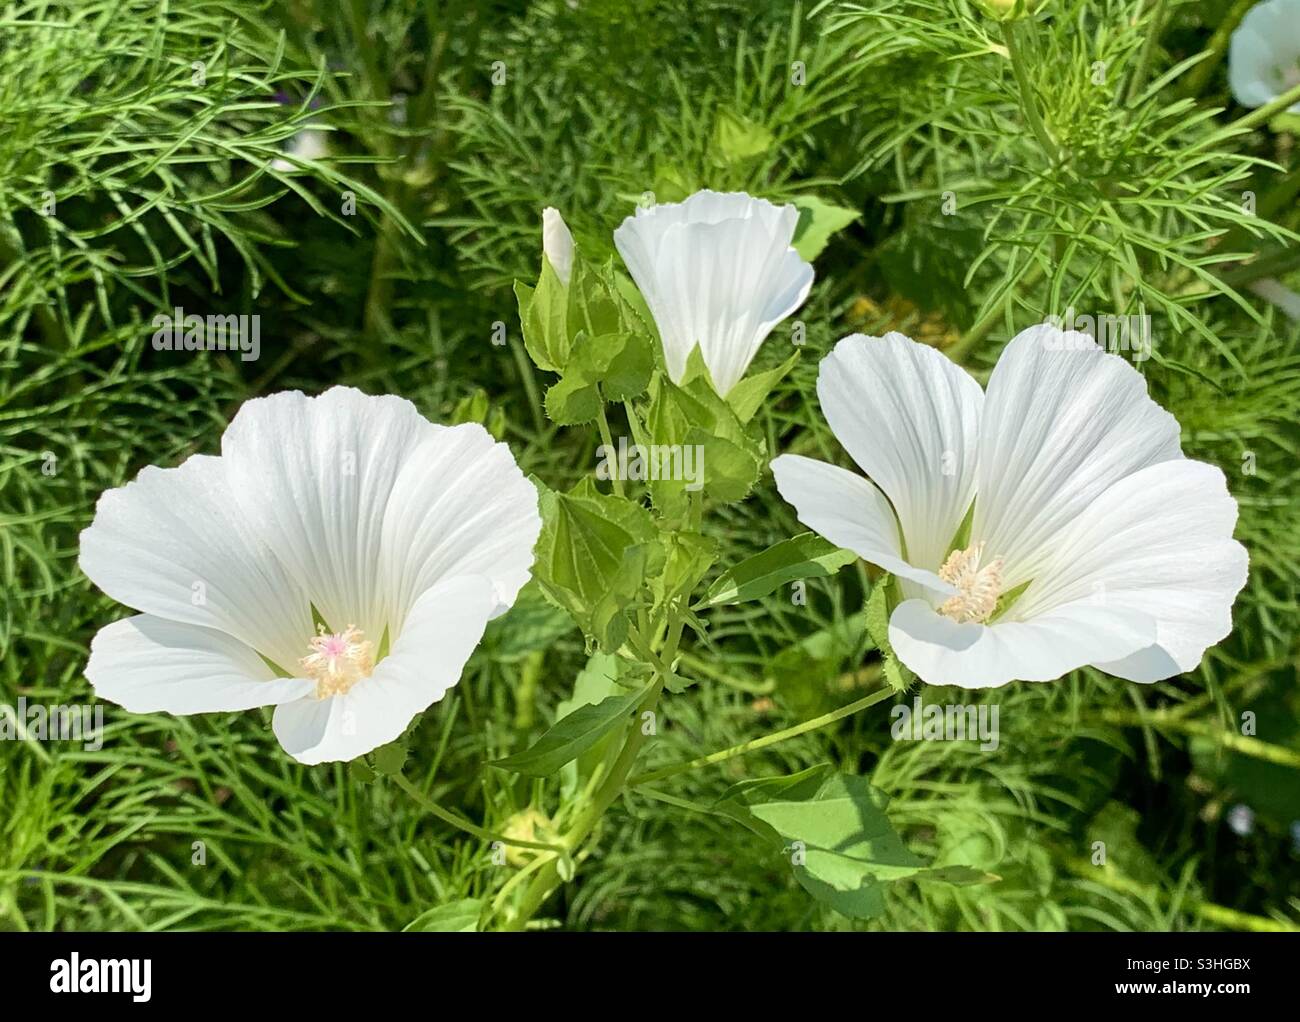 Malope trifida ‘Alba’ flowers in a London garden. Stock Photo